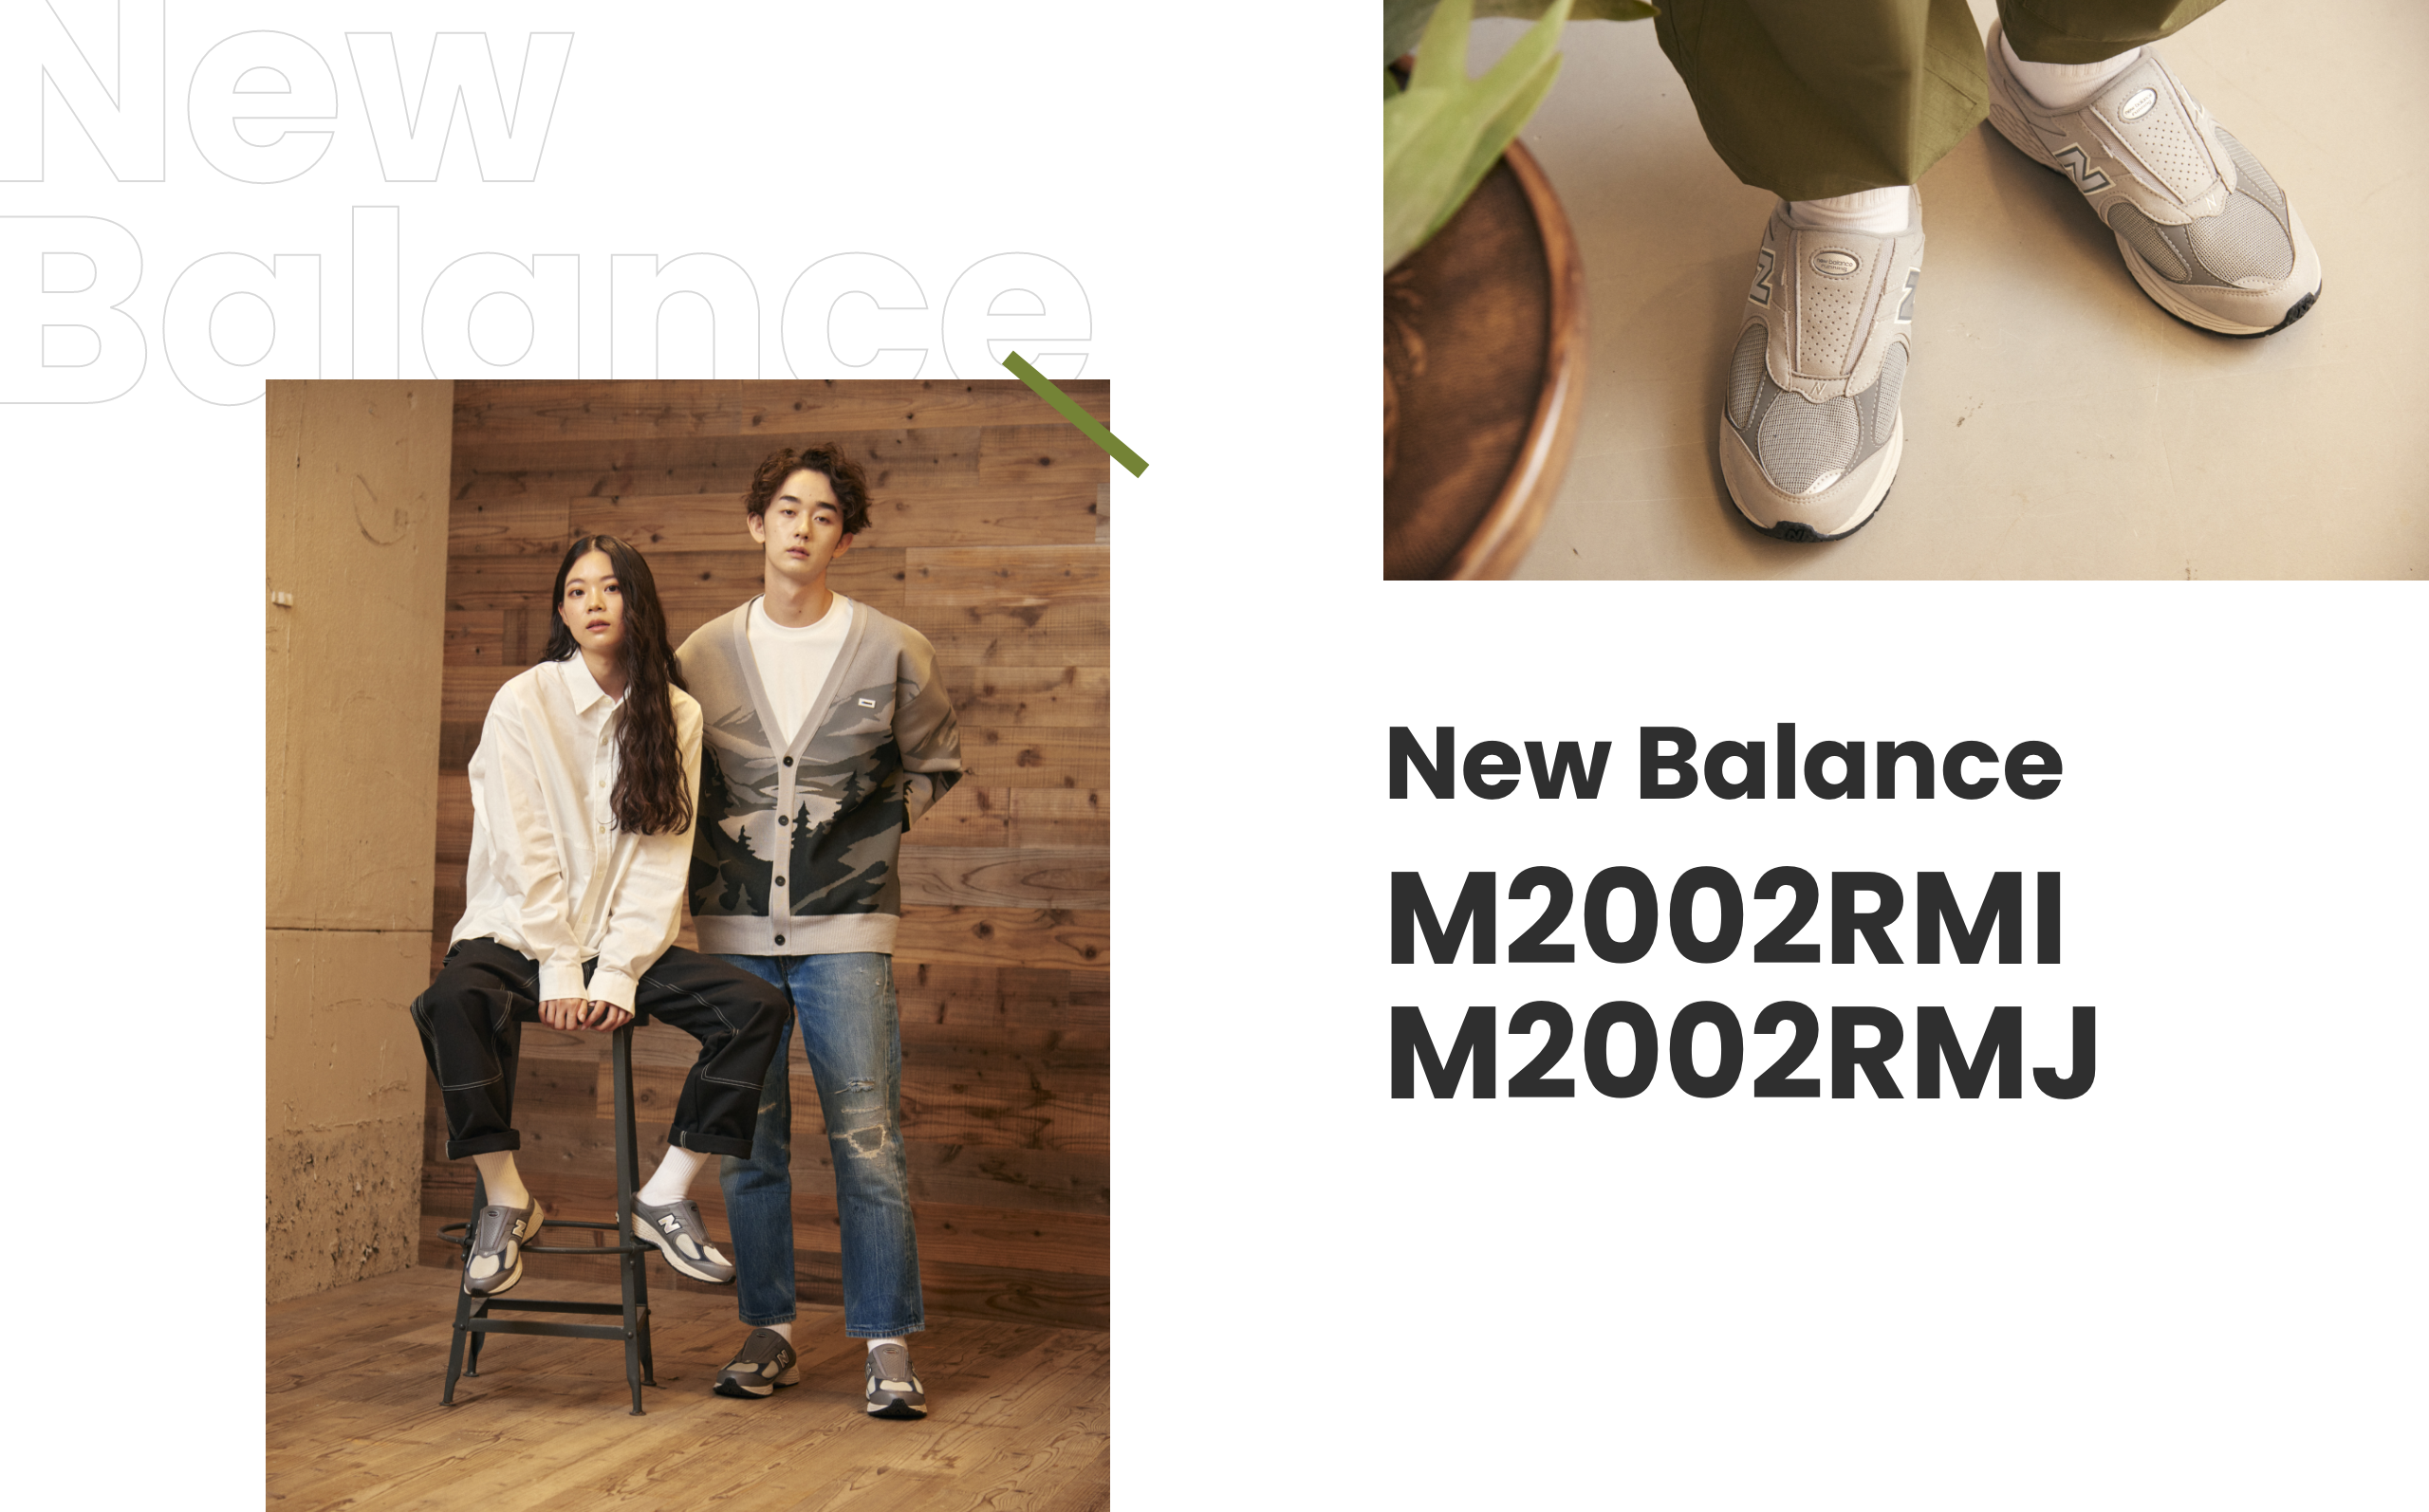 "New Balance M2002RMI/M2002RMJ"